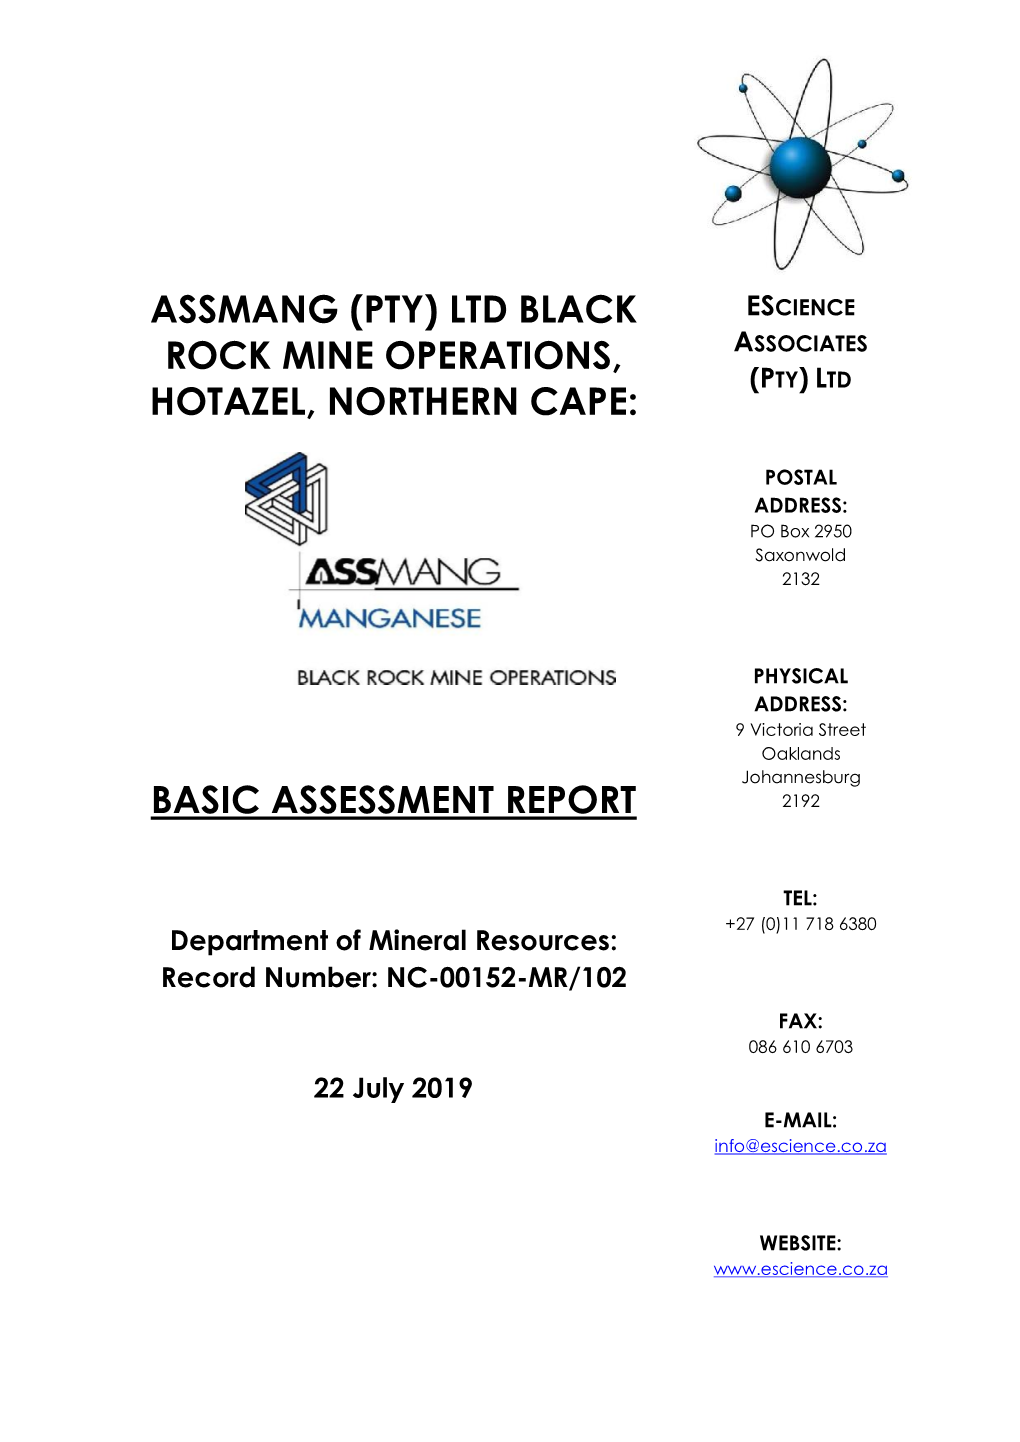 (Pty) Ltd Black Rock Mine Operations, Hotazel, Northern Cape